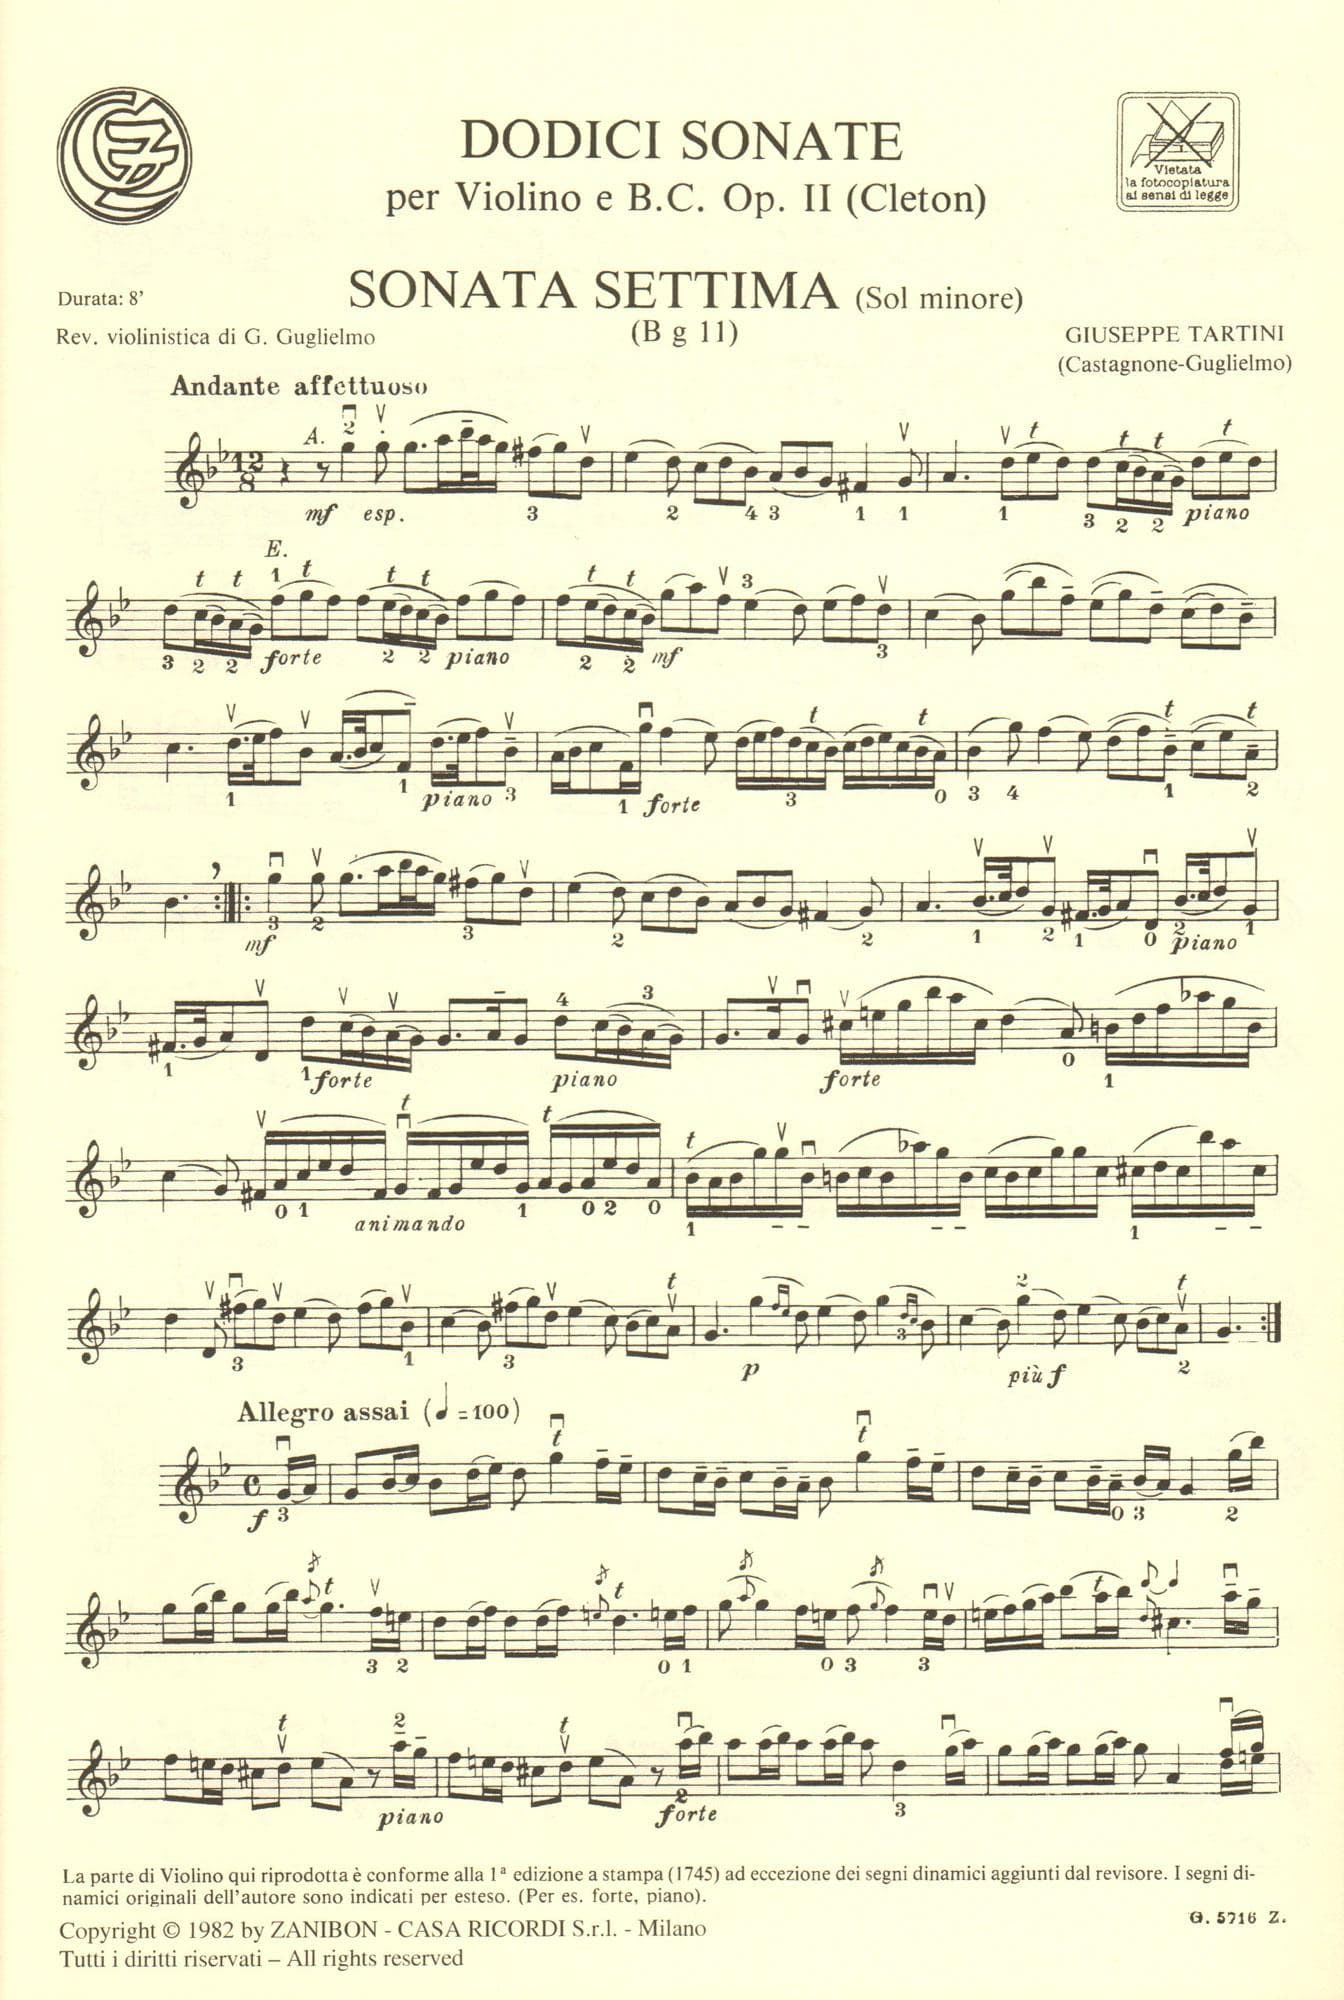 Tartini, Giuseppe - 12 Sonatas - for Violin and Piano - Volume II (Sonatas 7-12) - Zanibon